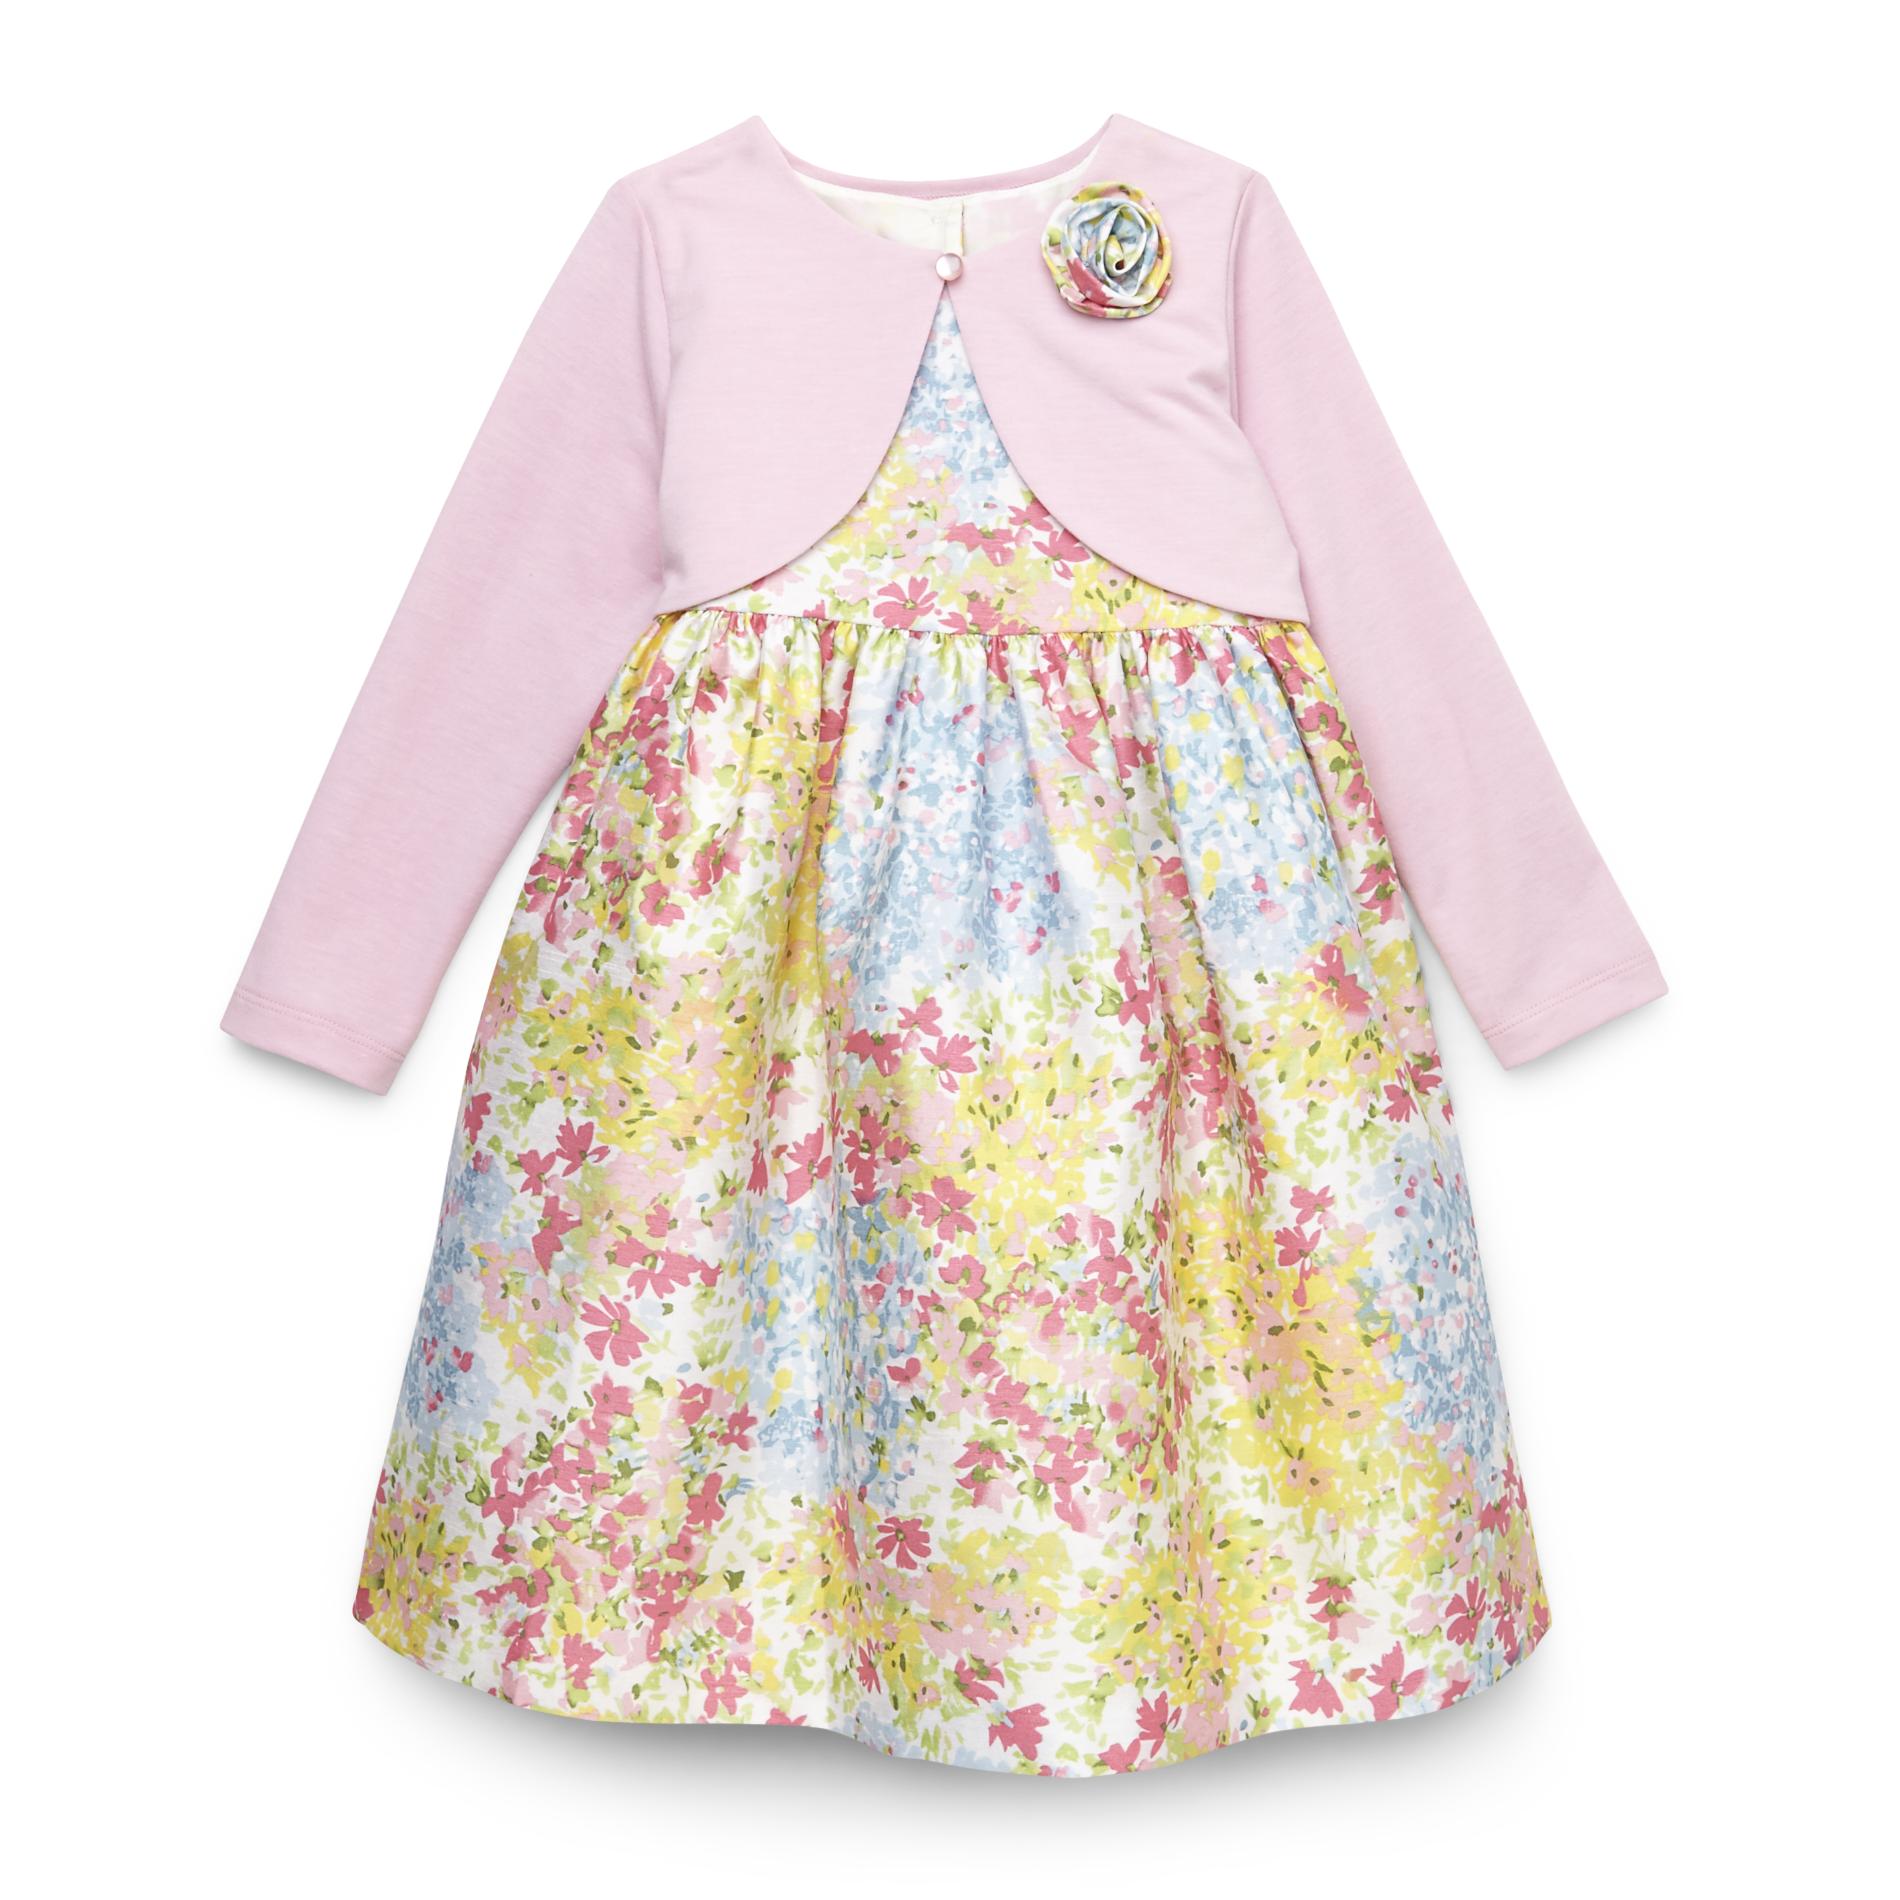 Holiday Editions Infant & Toddler Girl's Dress & Shrug - Floral